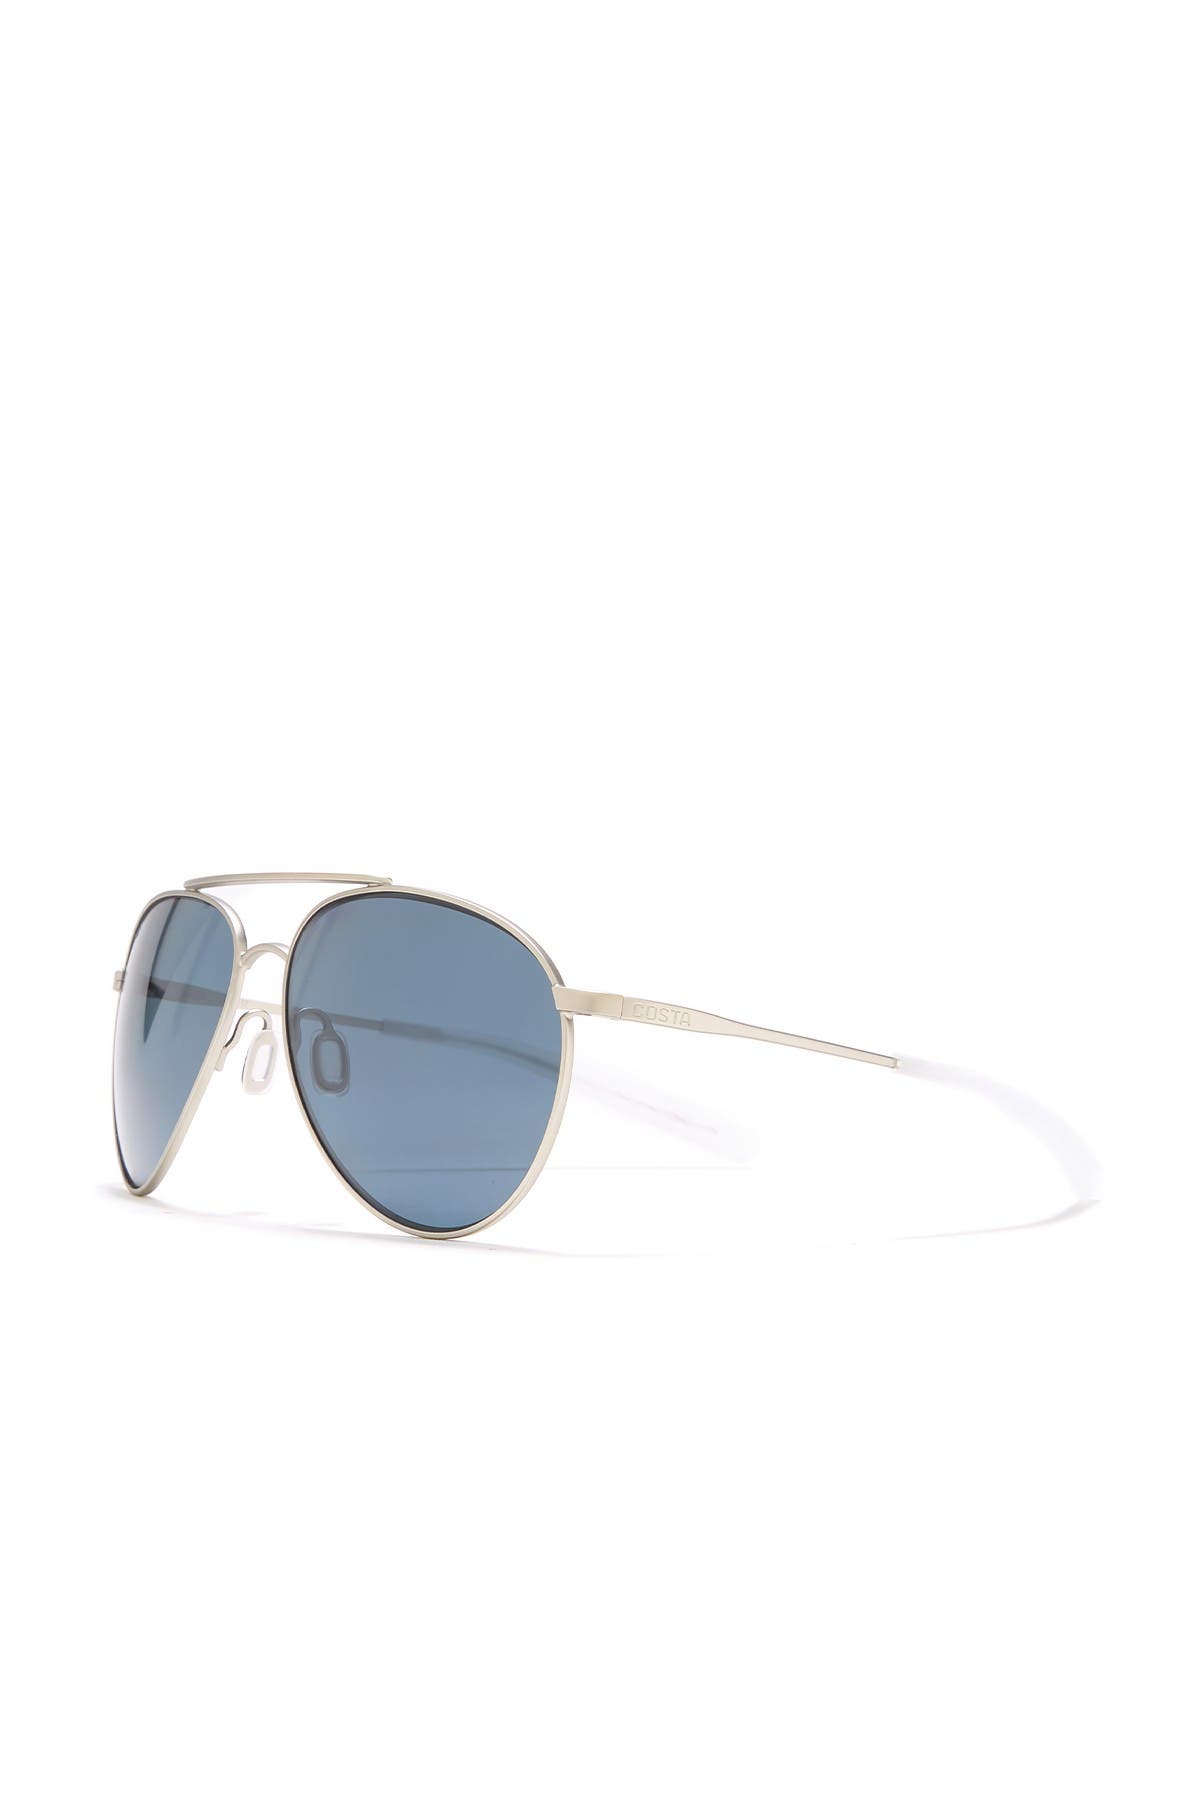 costa polarized aviator sunglasses